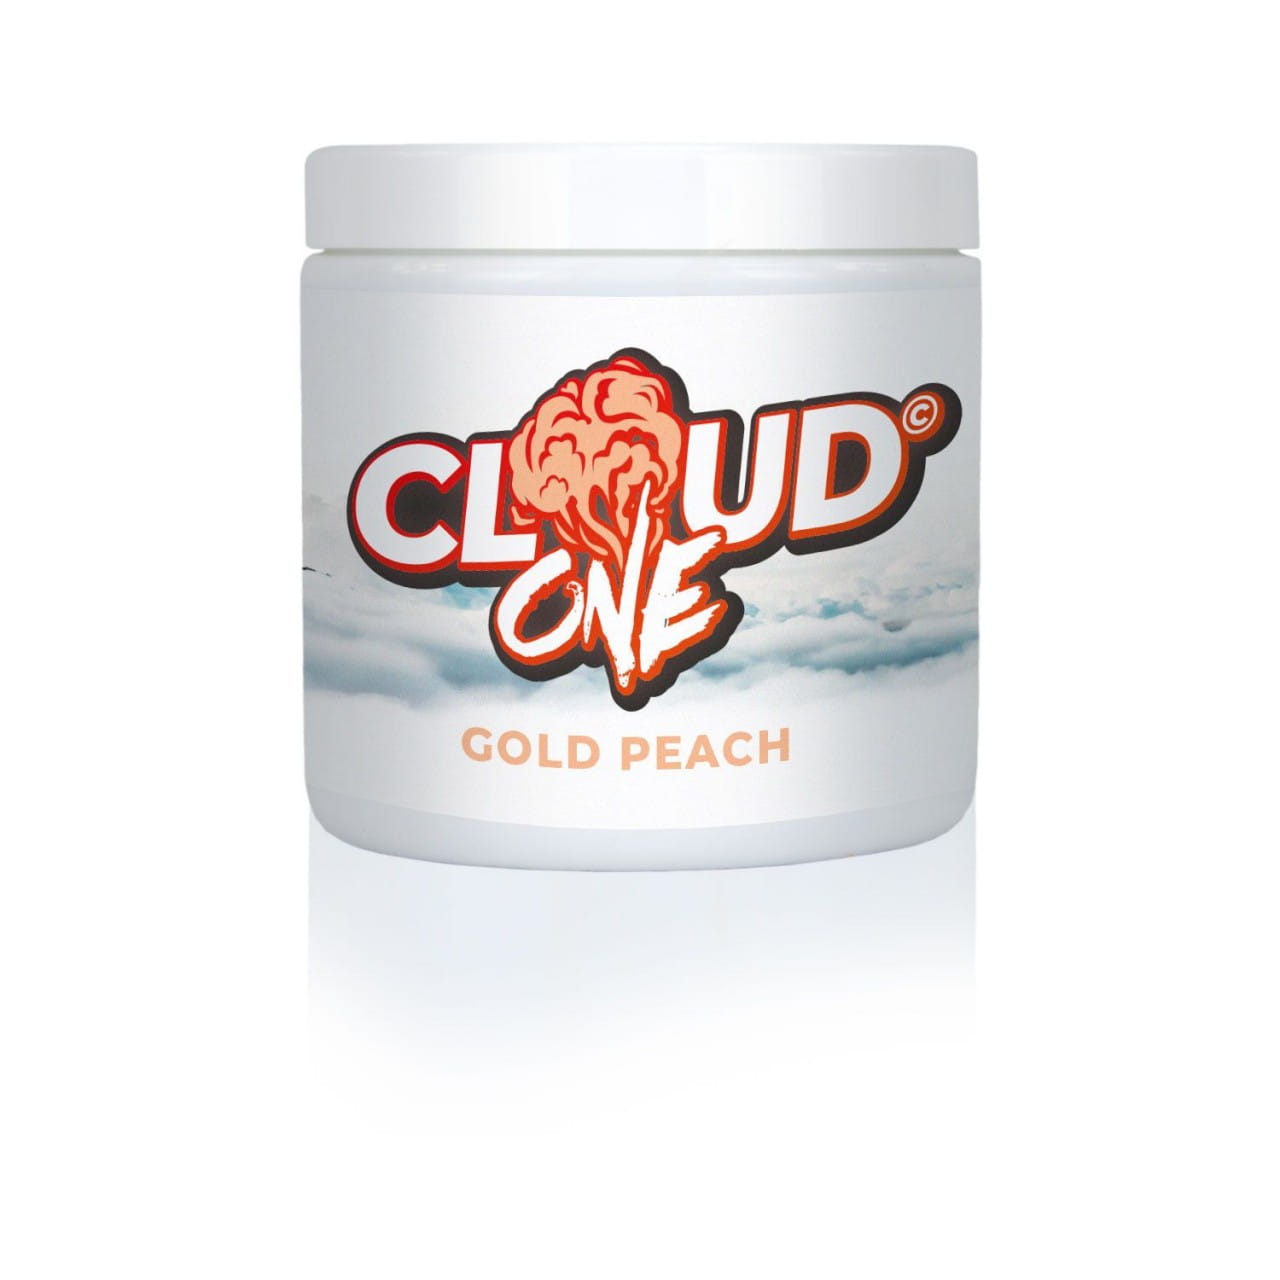 Cloud One - Gold Peach 200 g unter ohne Angabe